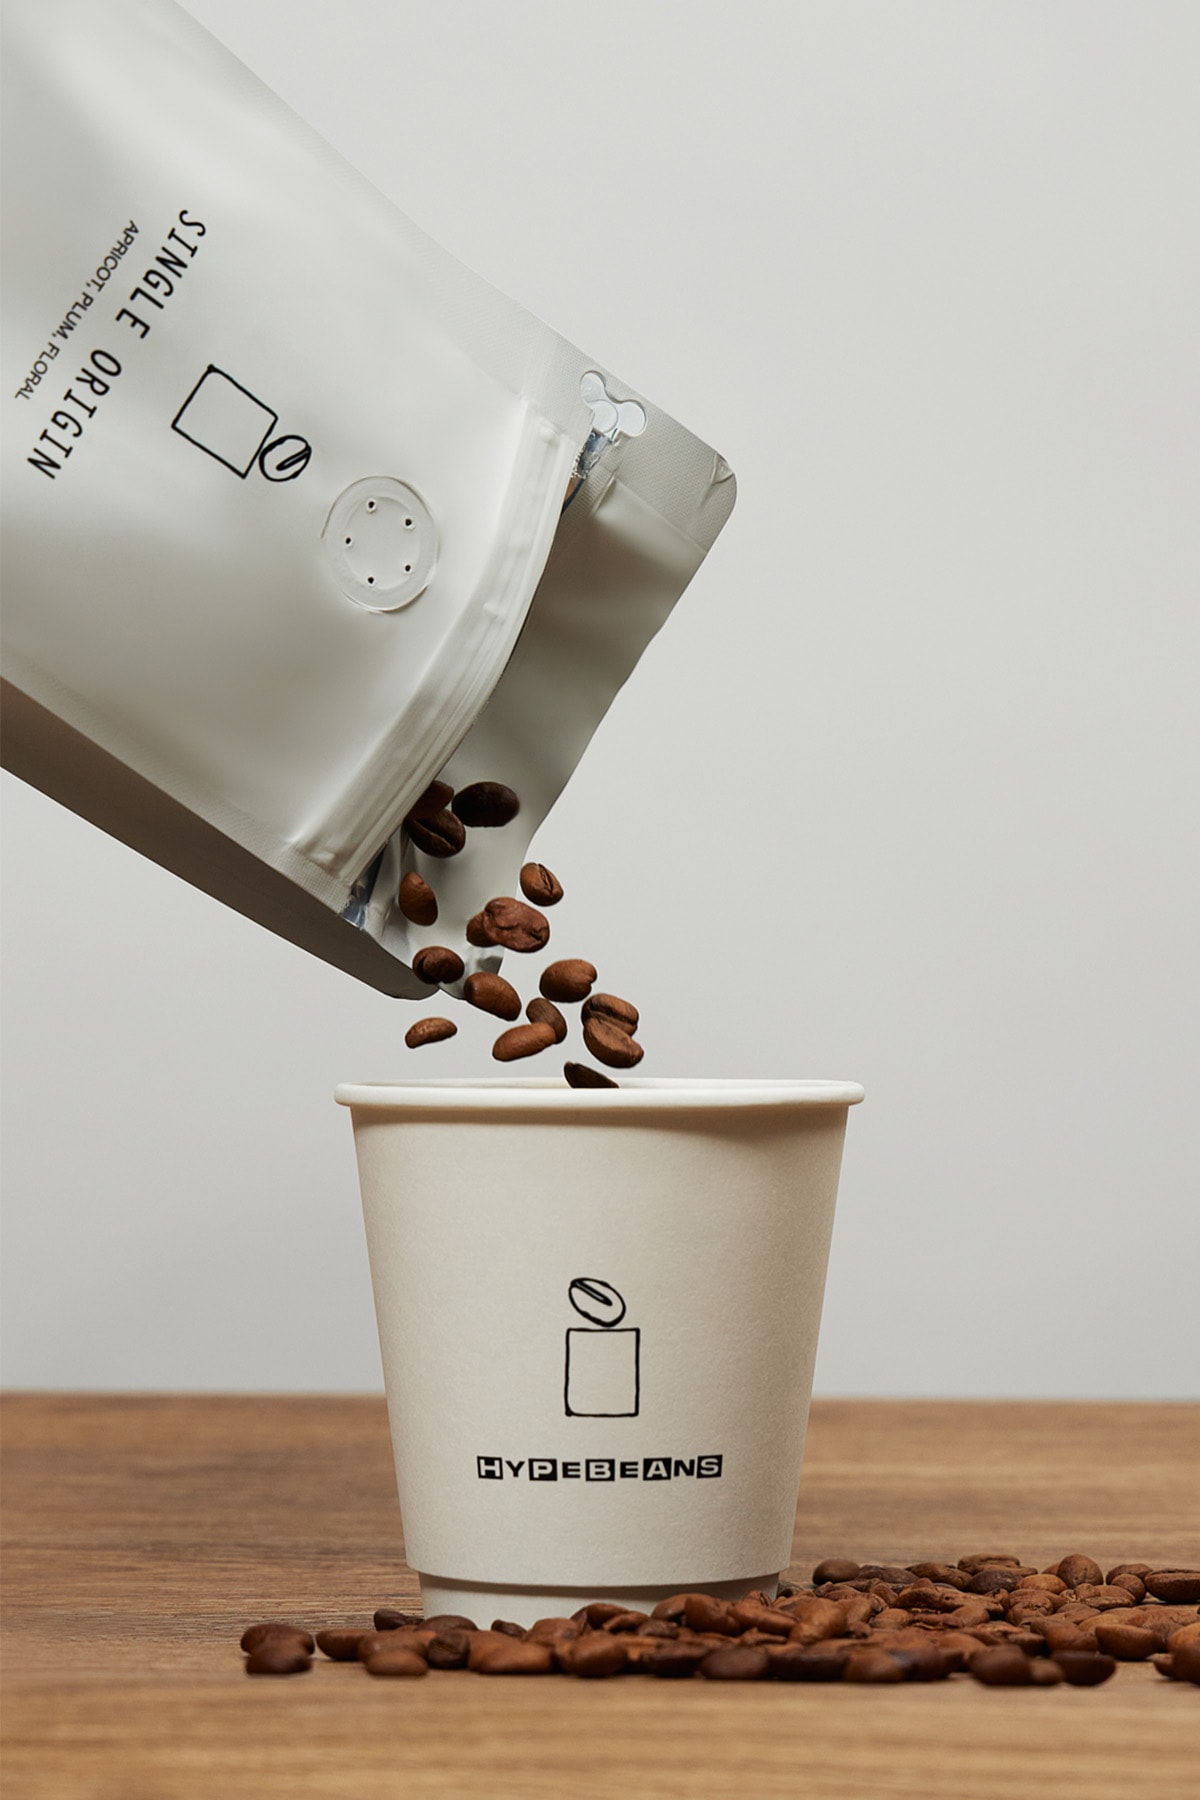 Hypebeans 成立四週年全新咖啡豆和週年紀念新品登場